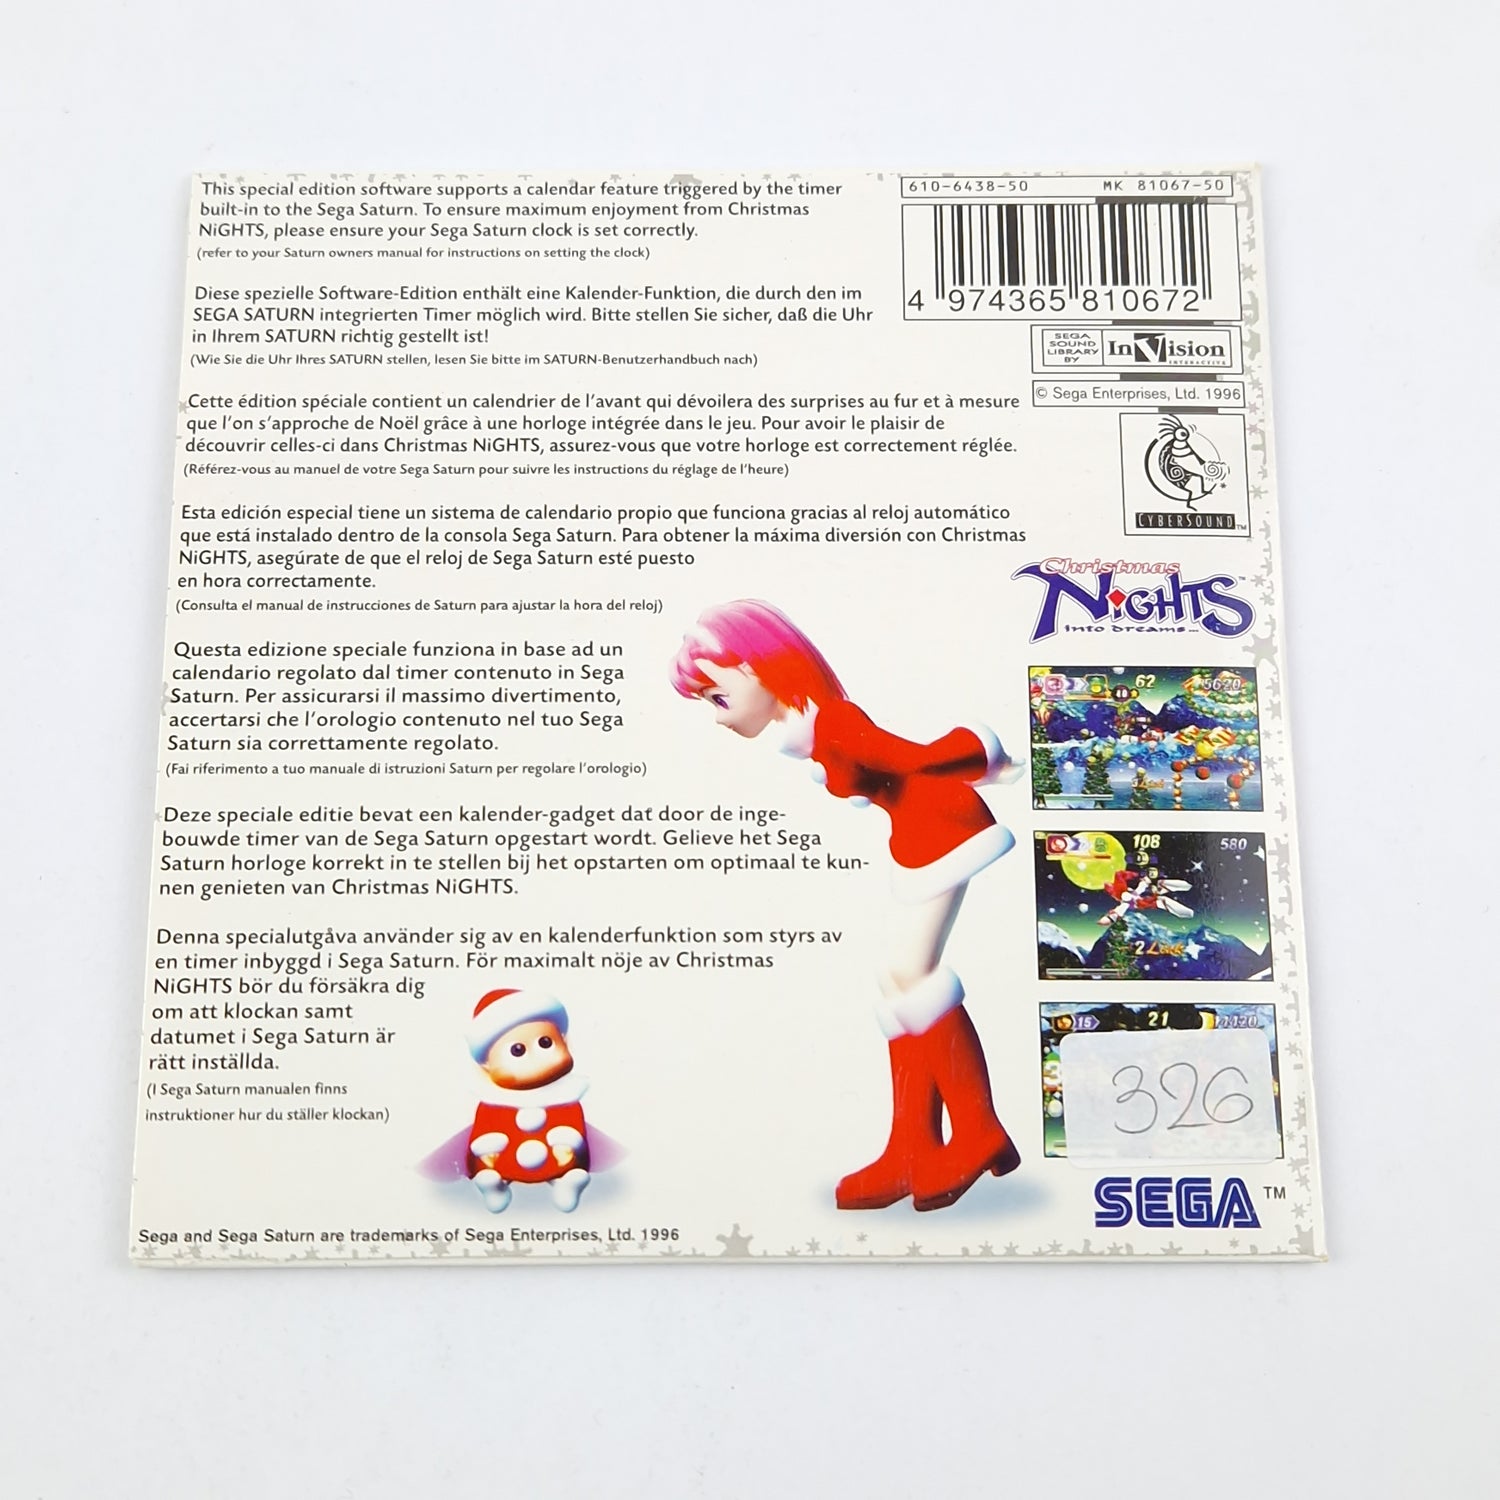 Sega Saturn Game : Christmas Nights into Dreams - CD DISK PAL Game